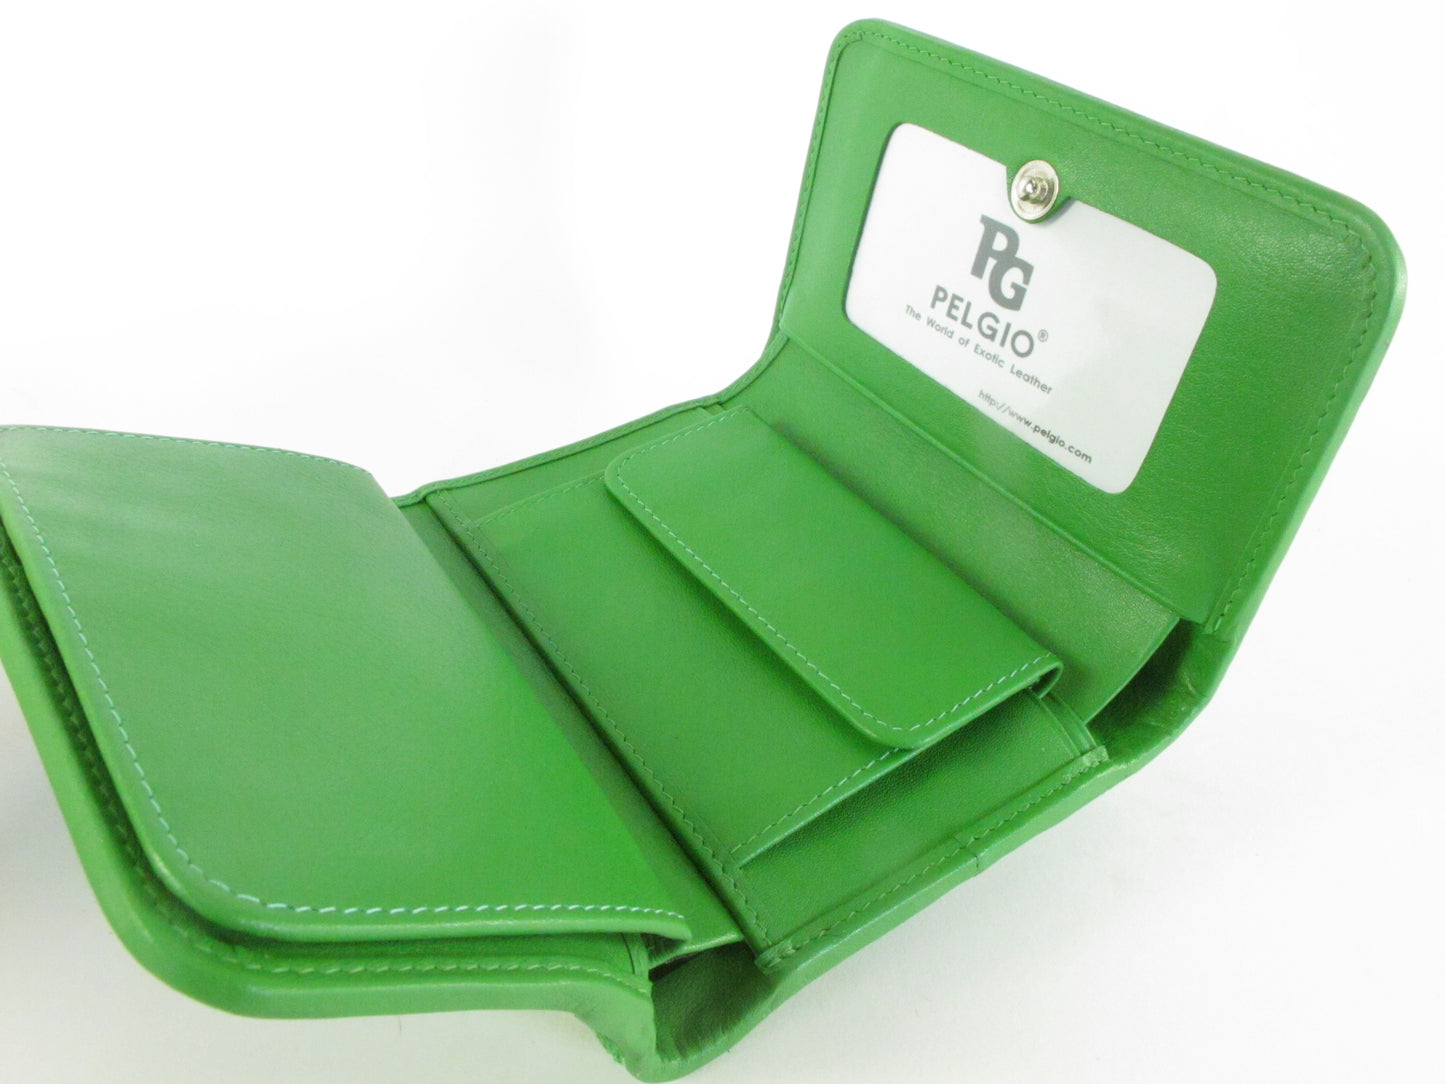 Genuine Polished Stingray Skin Leather Intrecciato Handmade Medium Trifold Clutch Wallet Purse